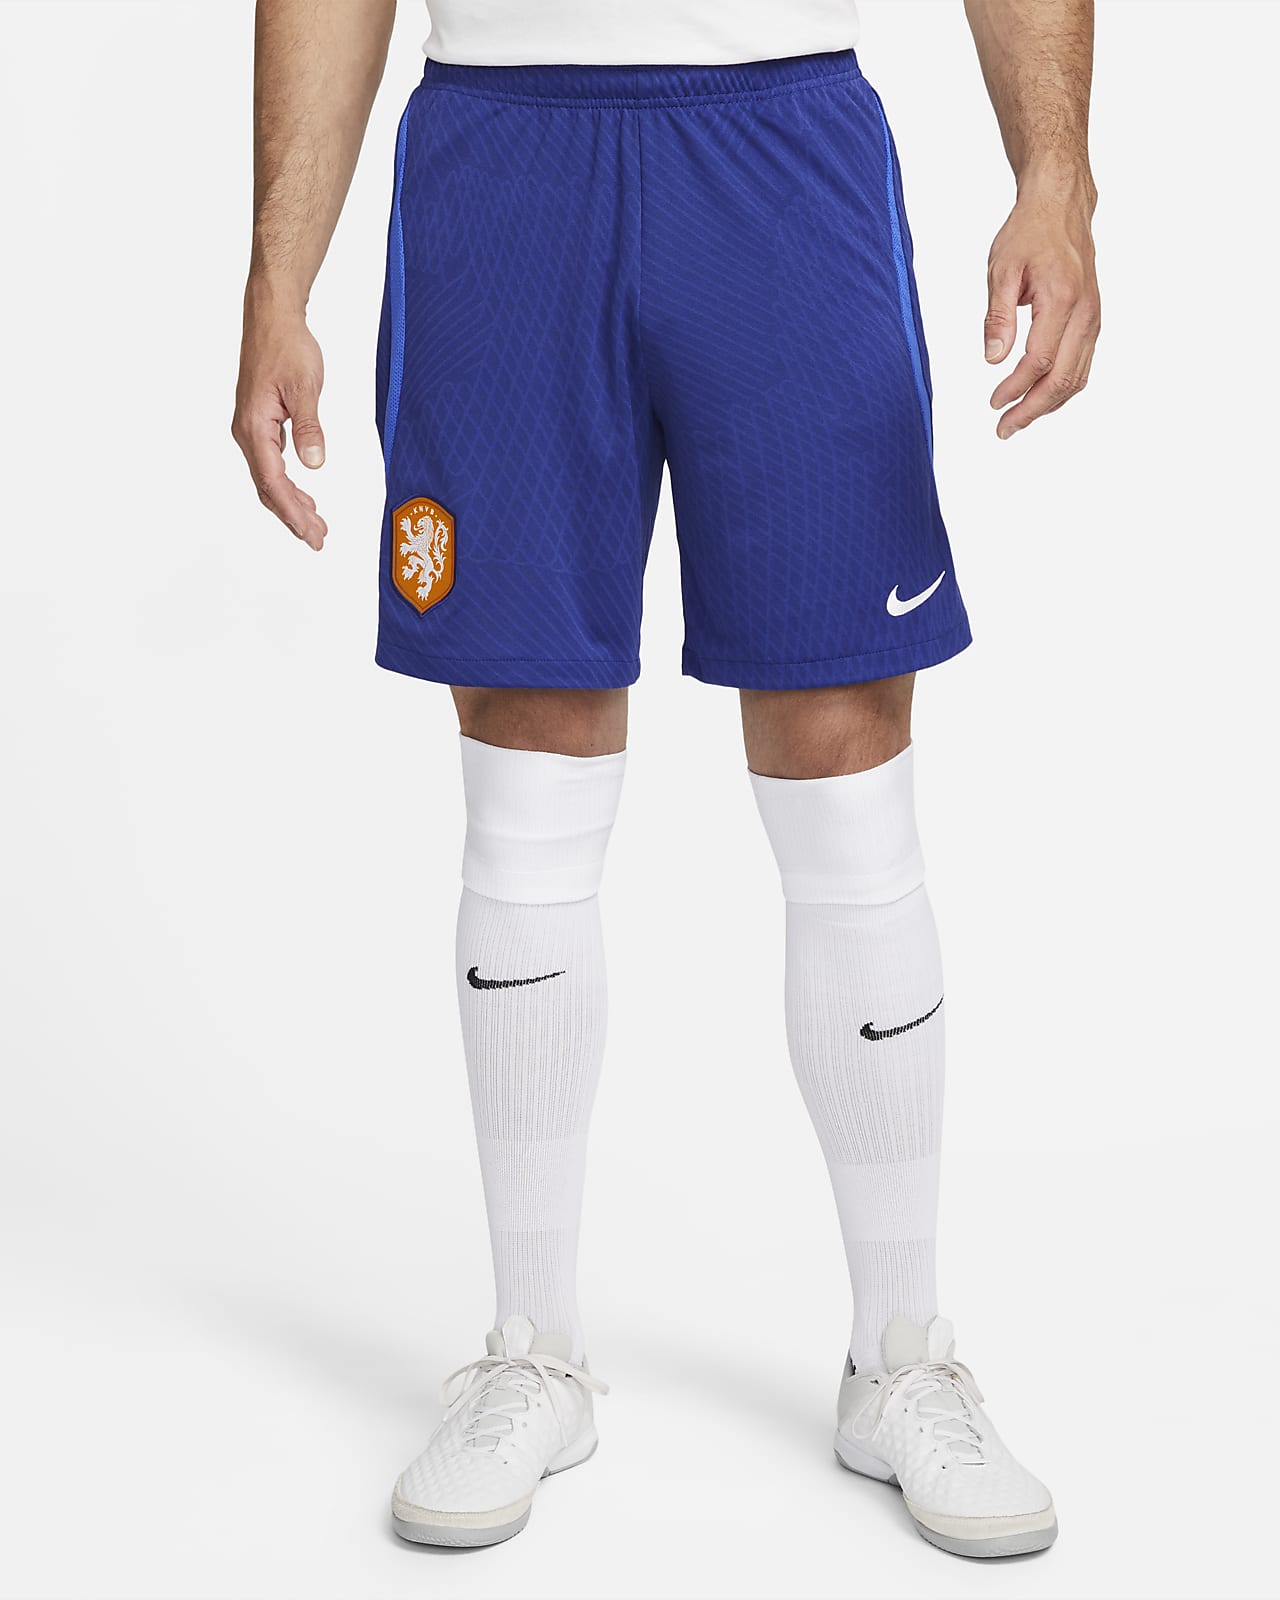 Netherlands Strike Nike Dri-FIT Knit Soccer Shorts.